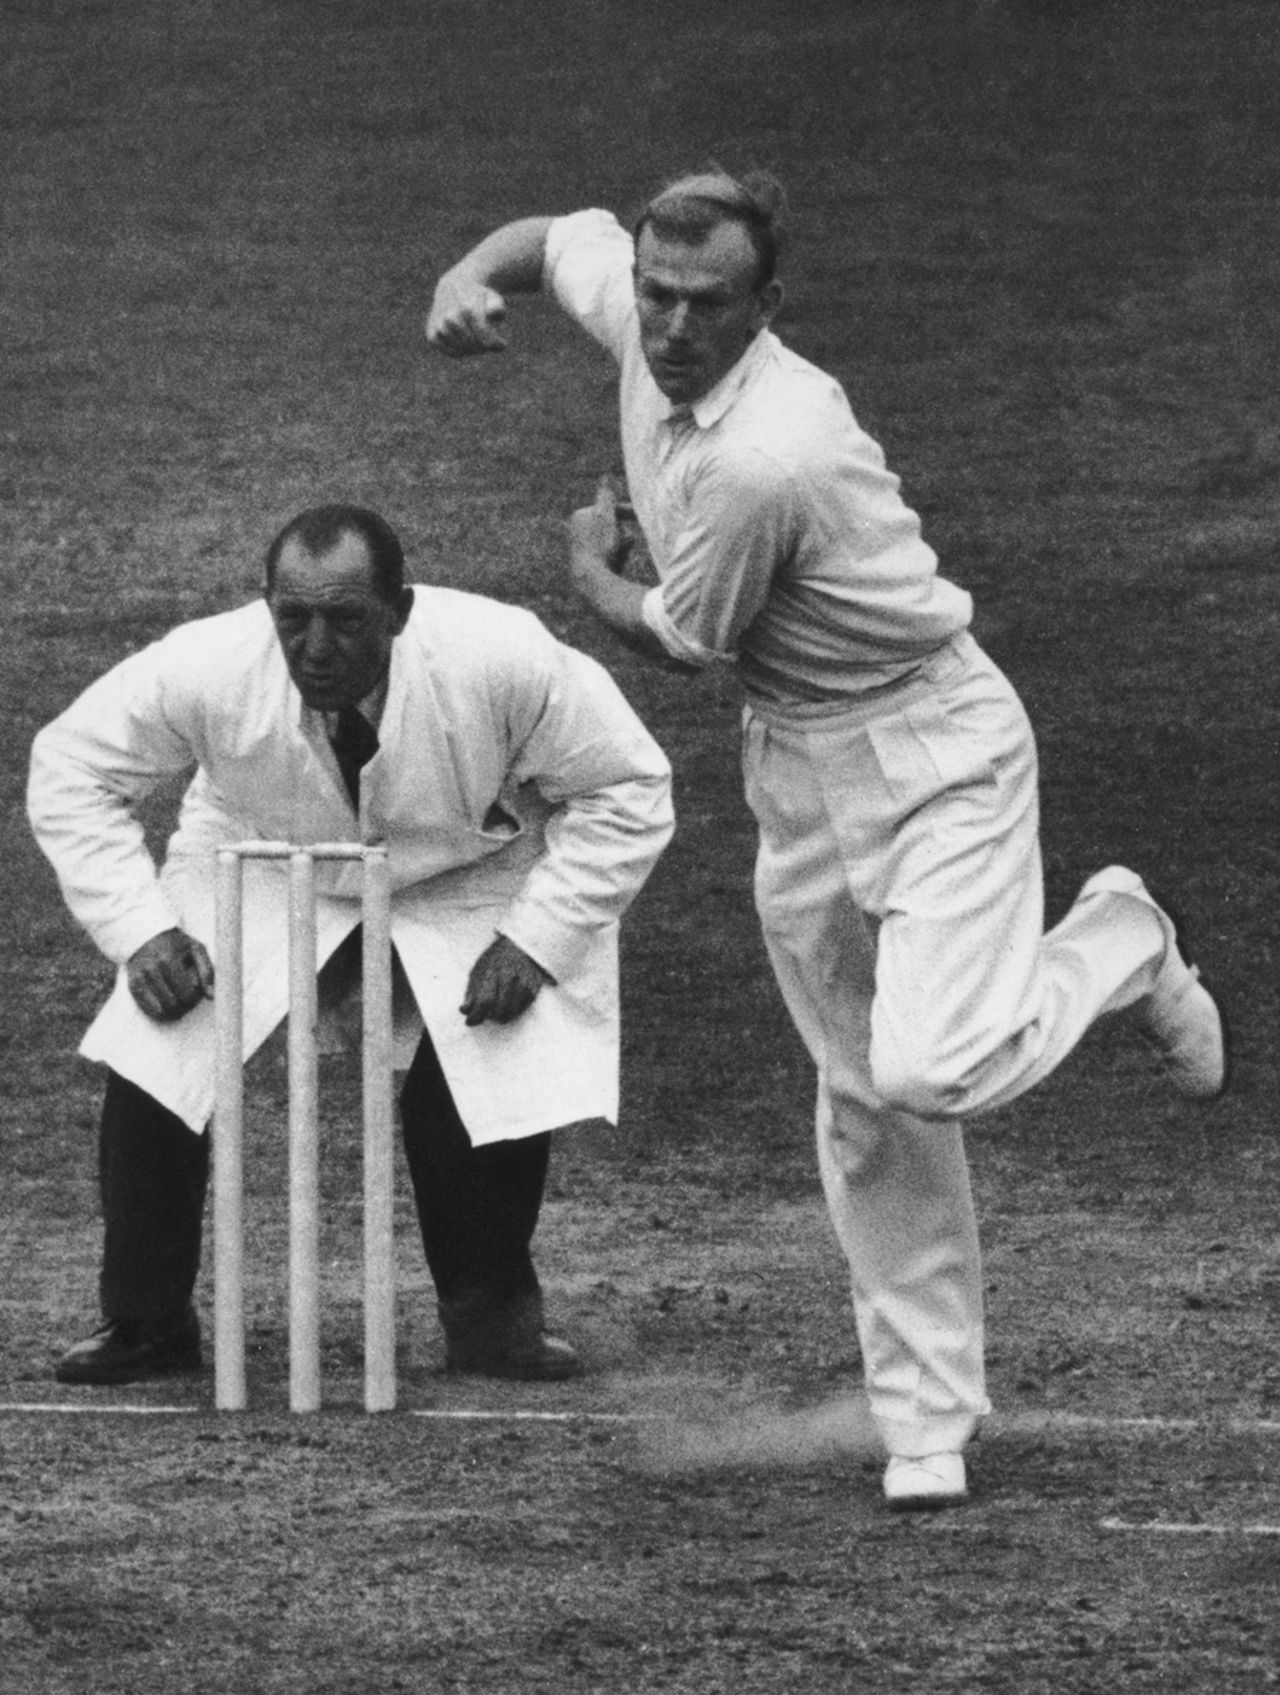 Tony Lock bowls for Surrey, The Oval, 1952